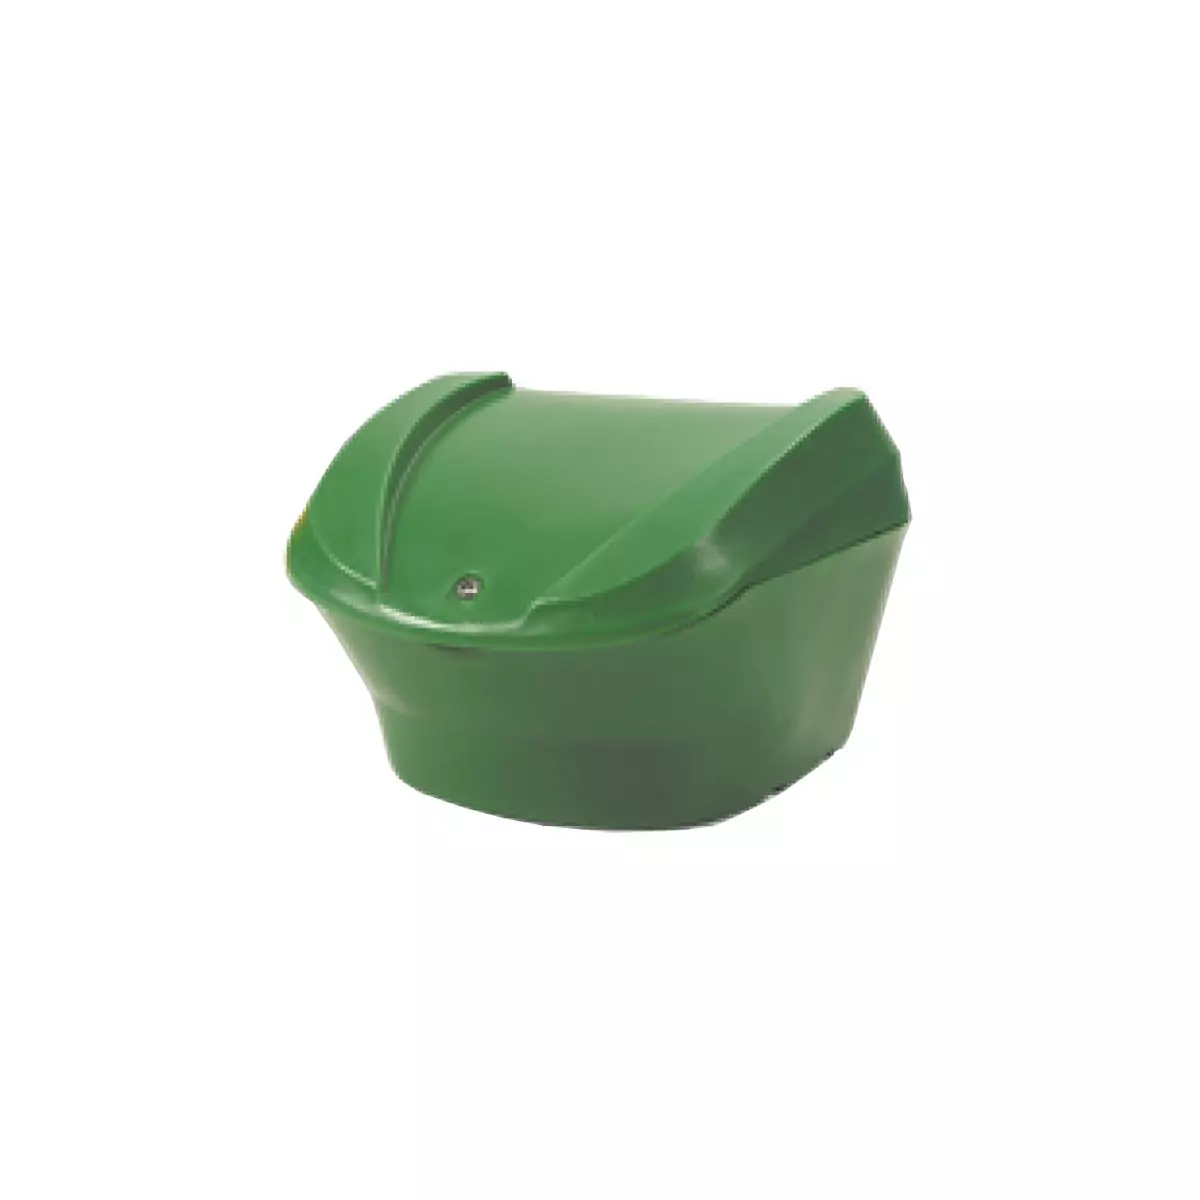 Product sheet Multi-purpose storage bin 50 liters green